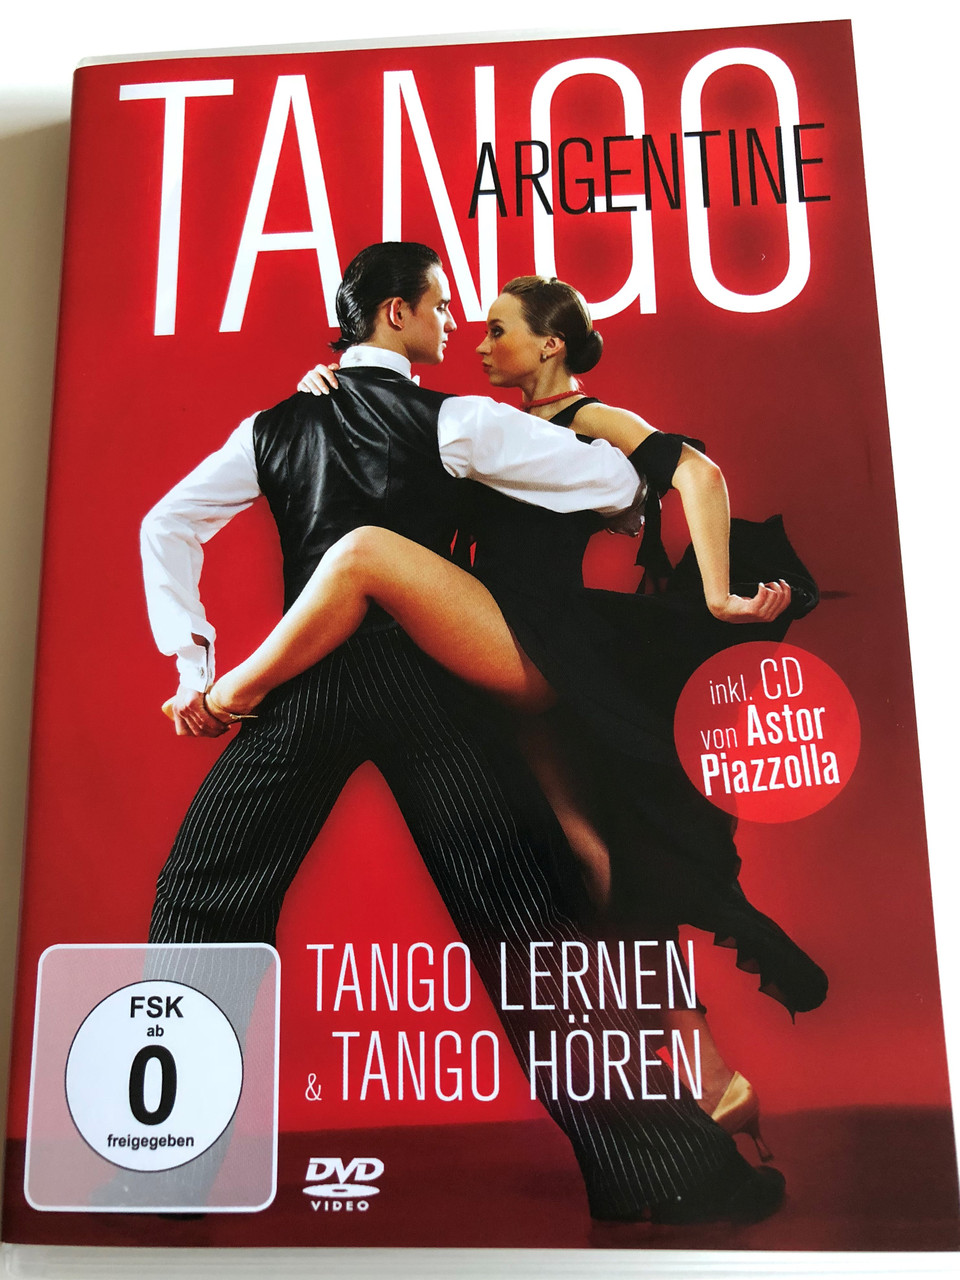 Tango Argentine DVD 2010 Tango Lernen & Tango Hören / Includes CD Astor  Piazzolla / Listen and Learn Tango - German release / Zyx Music DVD 2119 -  bibleinmylanguage